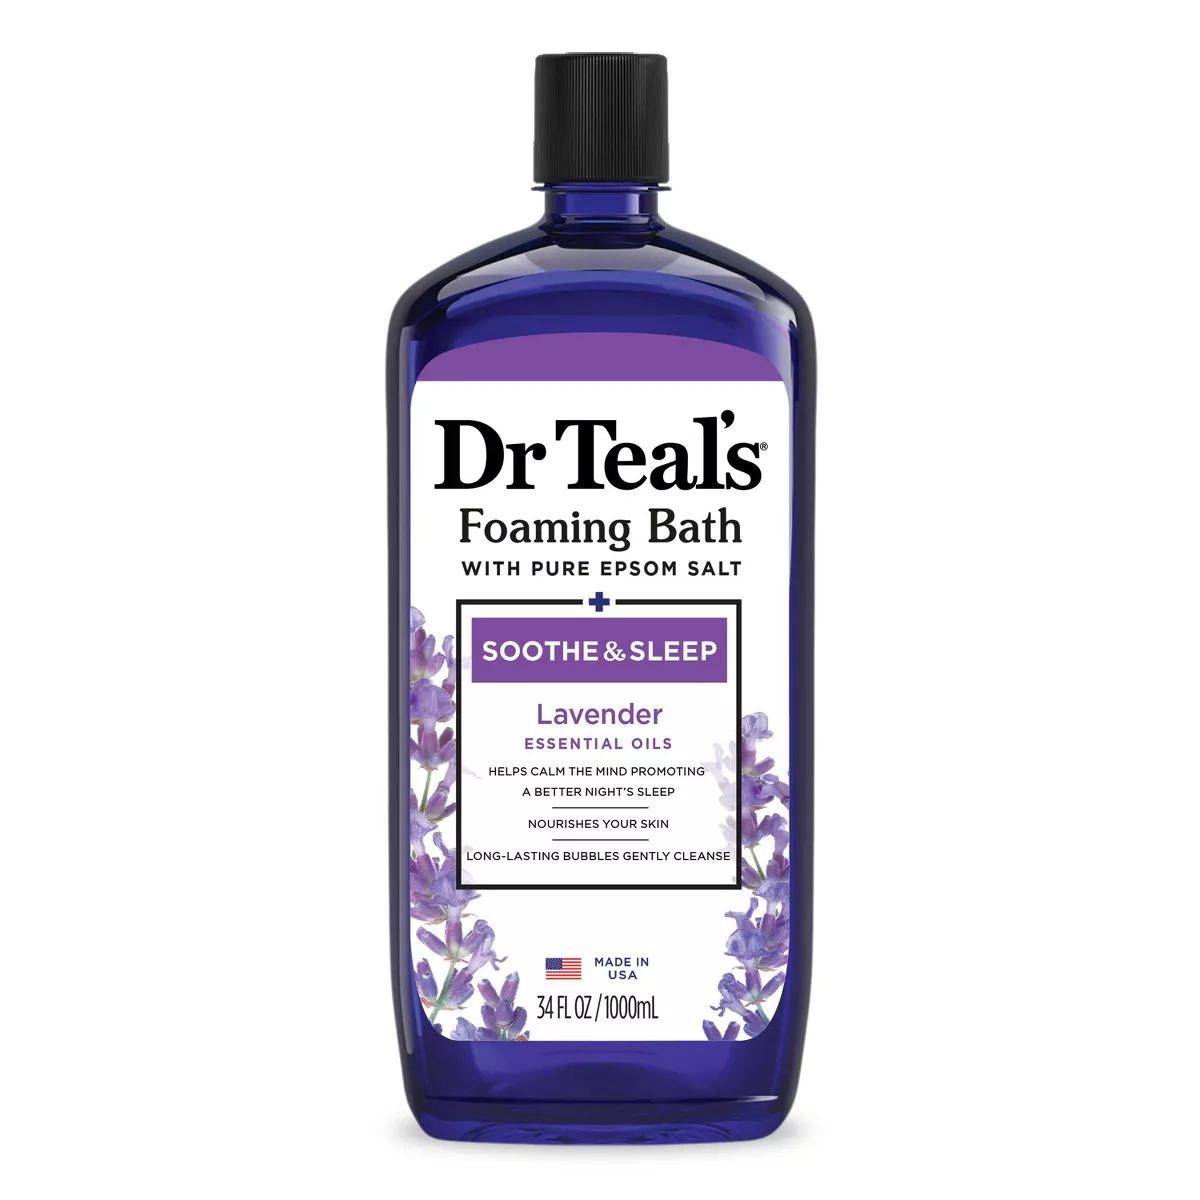 Dr Teal's Soothe & Sleep Lavender Foaming Bubble Bath - 34 fl oz | Target